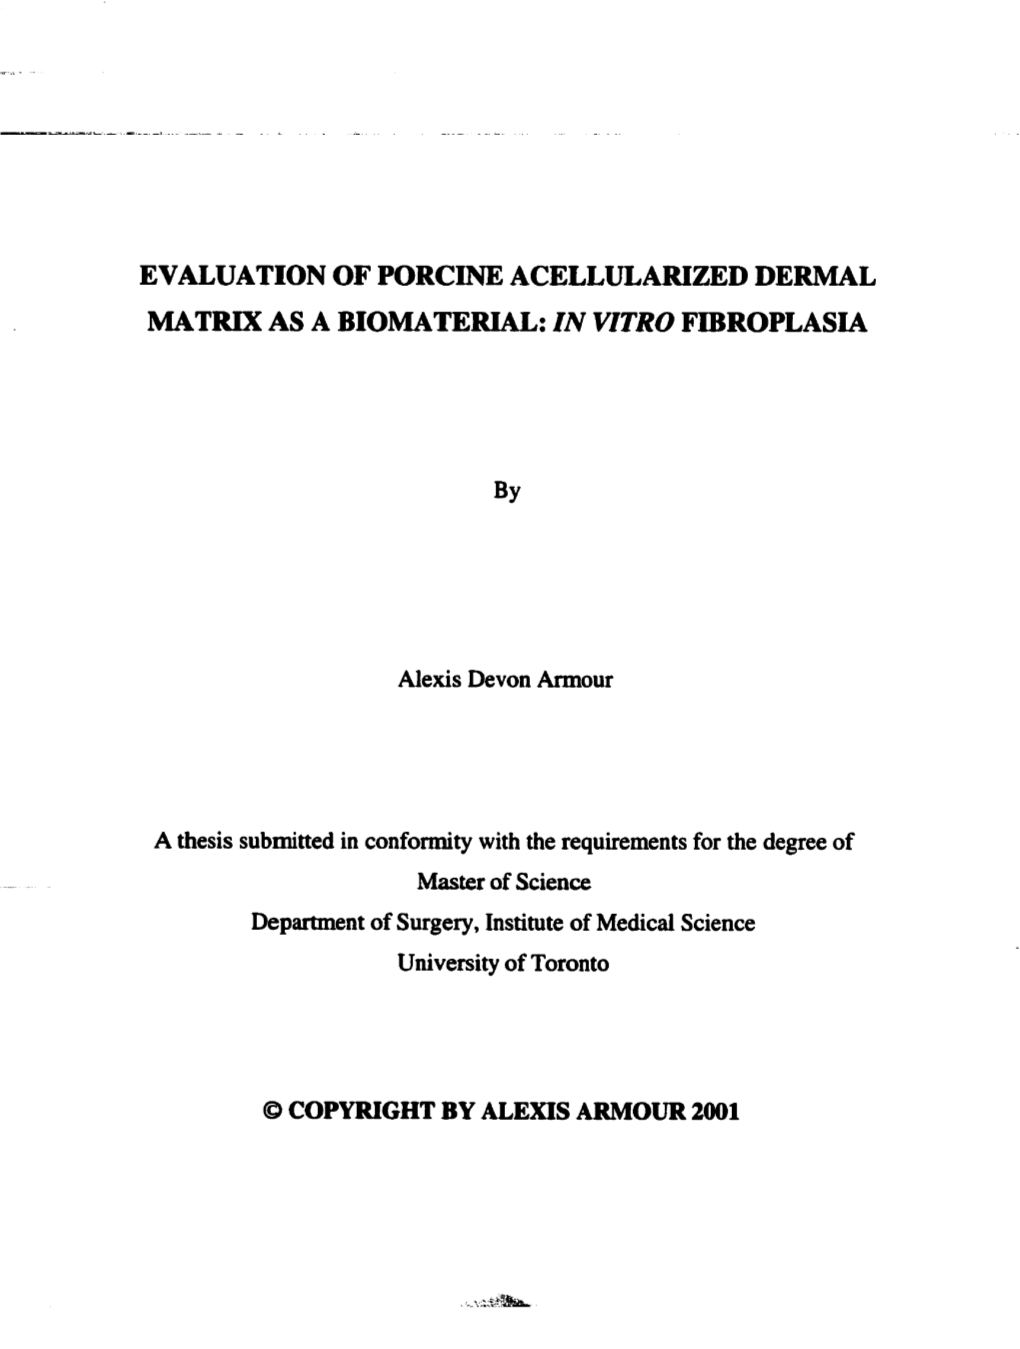 Evaluation of Porcine Acellularized Dermal Matrix As a Biomaterial: in Vitro Fibroplasia